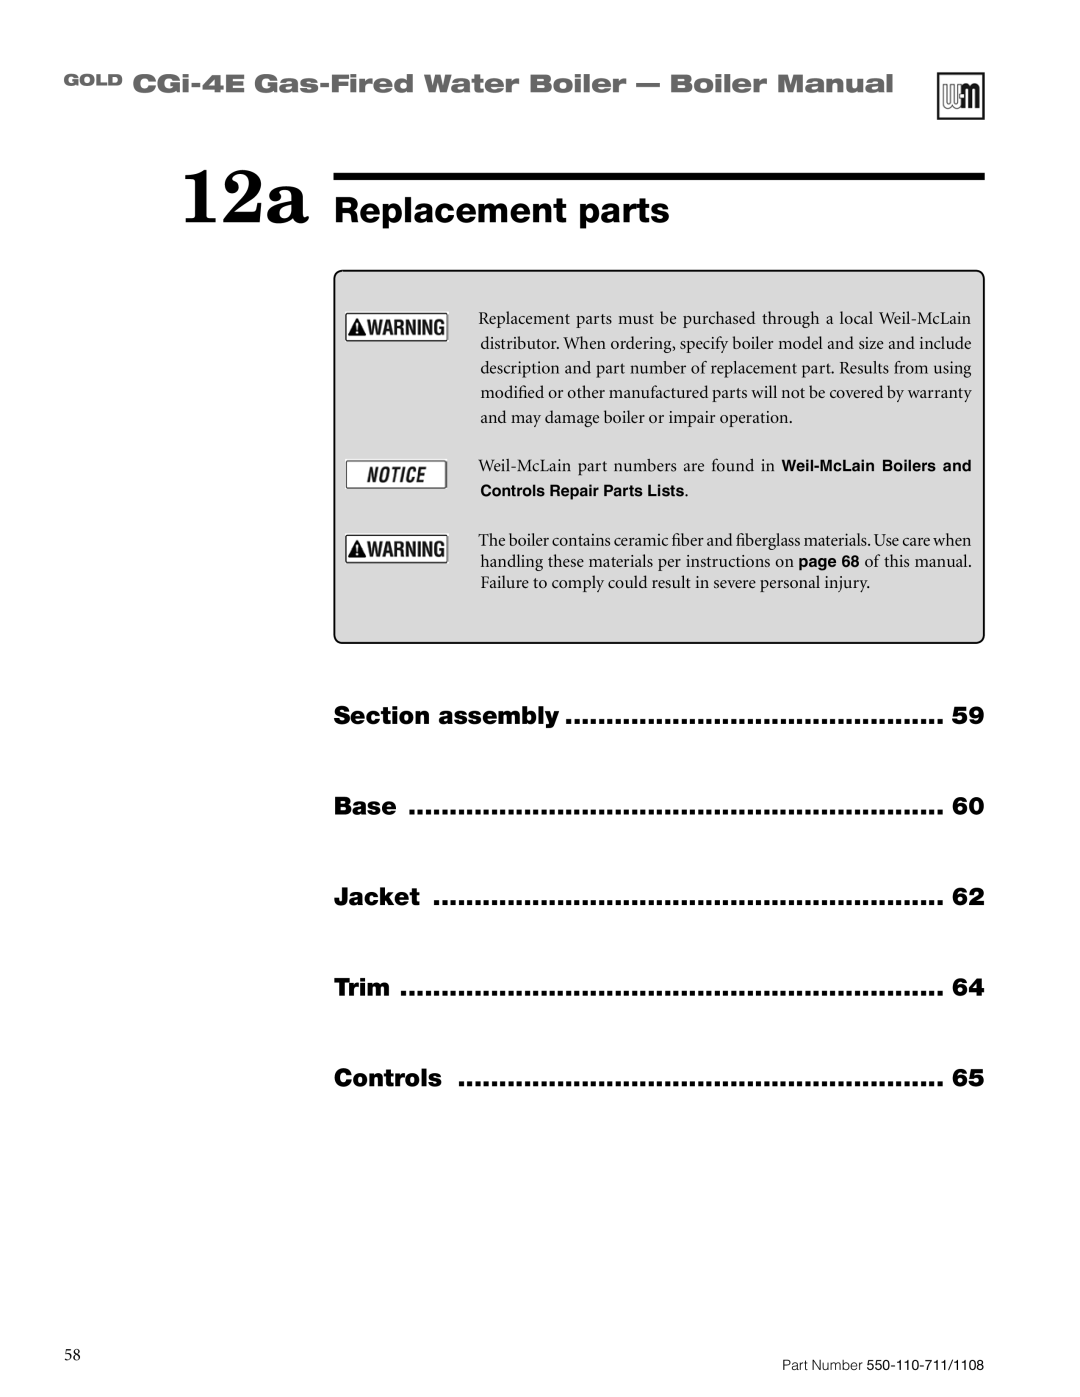 Weil-McLain CGI-4E manual 12a Replacement parts, GOLD CGi-4E Gas-FiredWater Boiler - Boiler Manual 